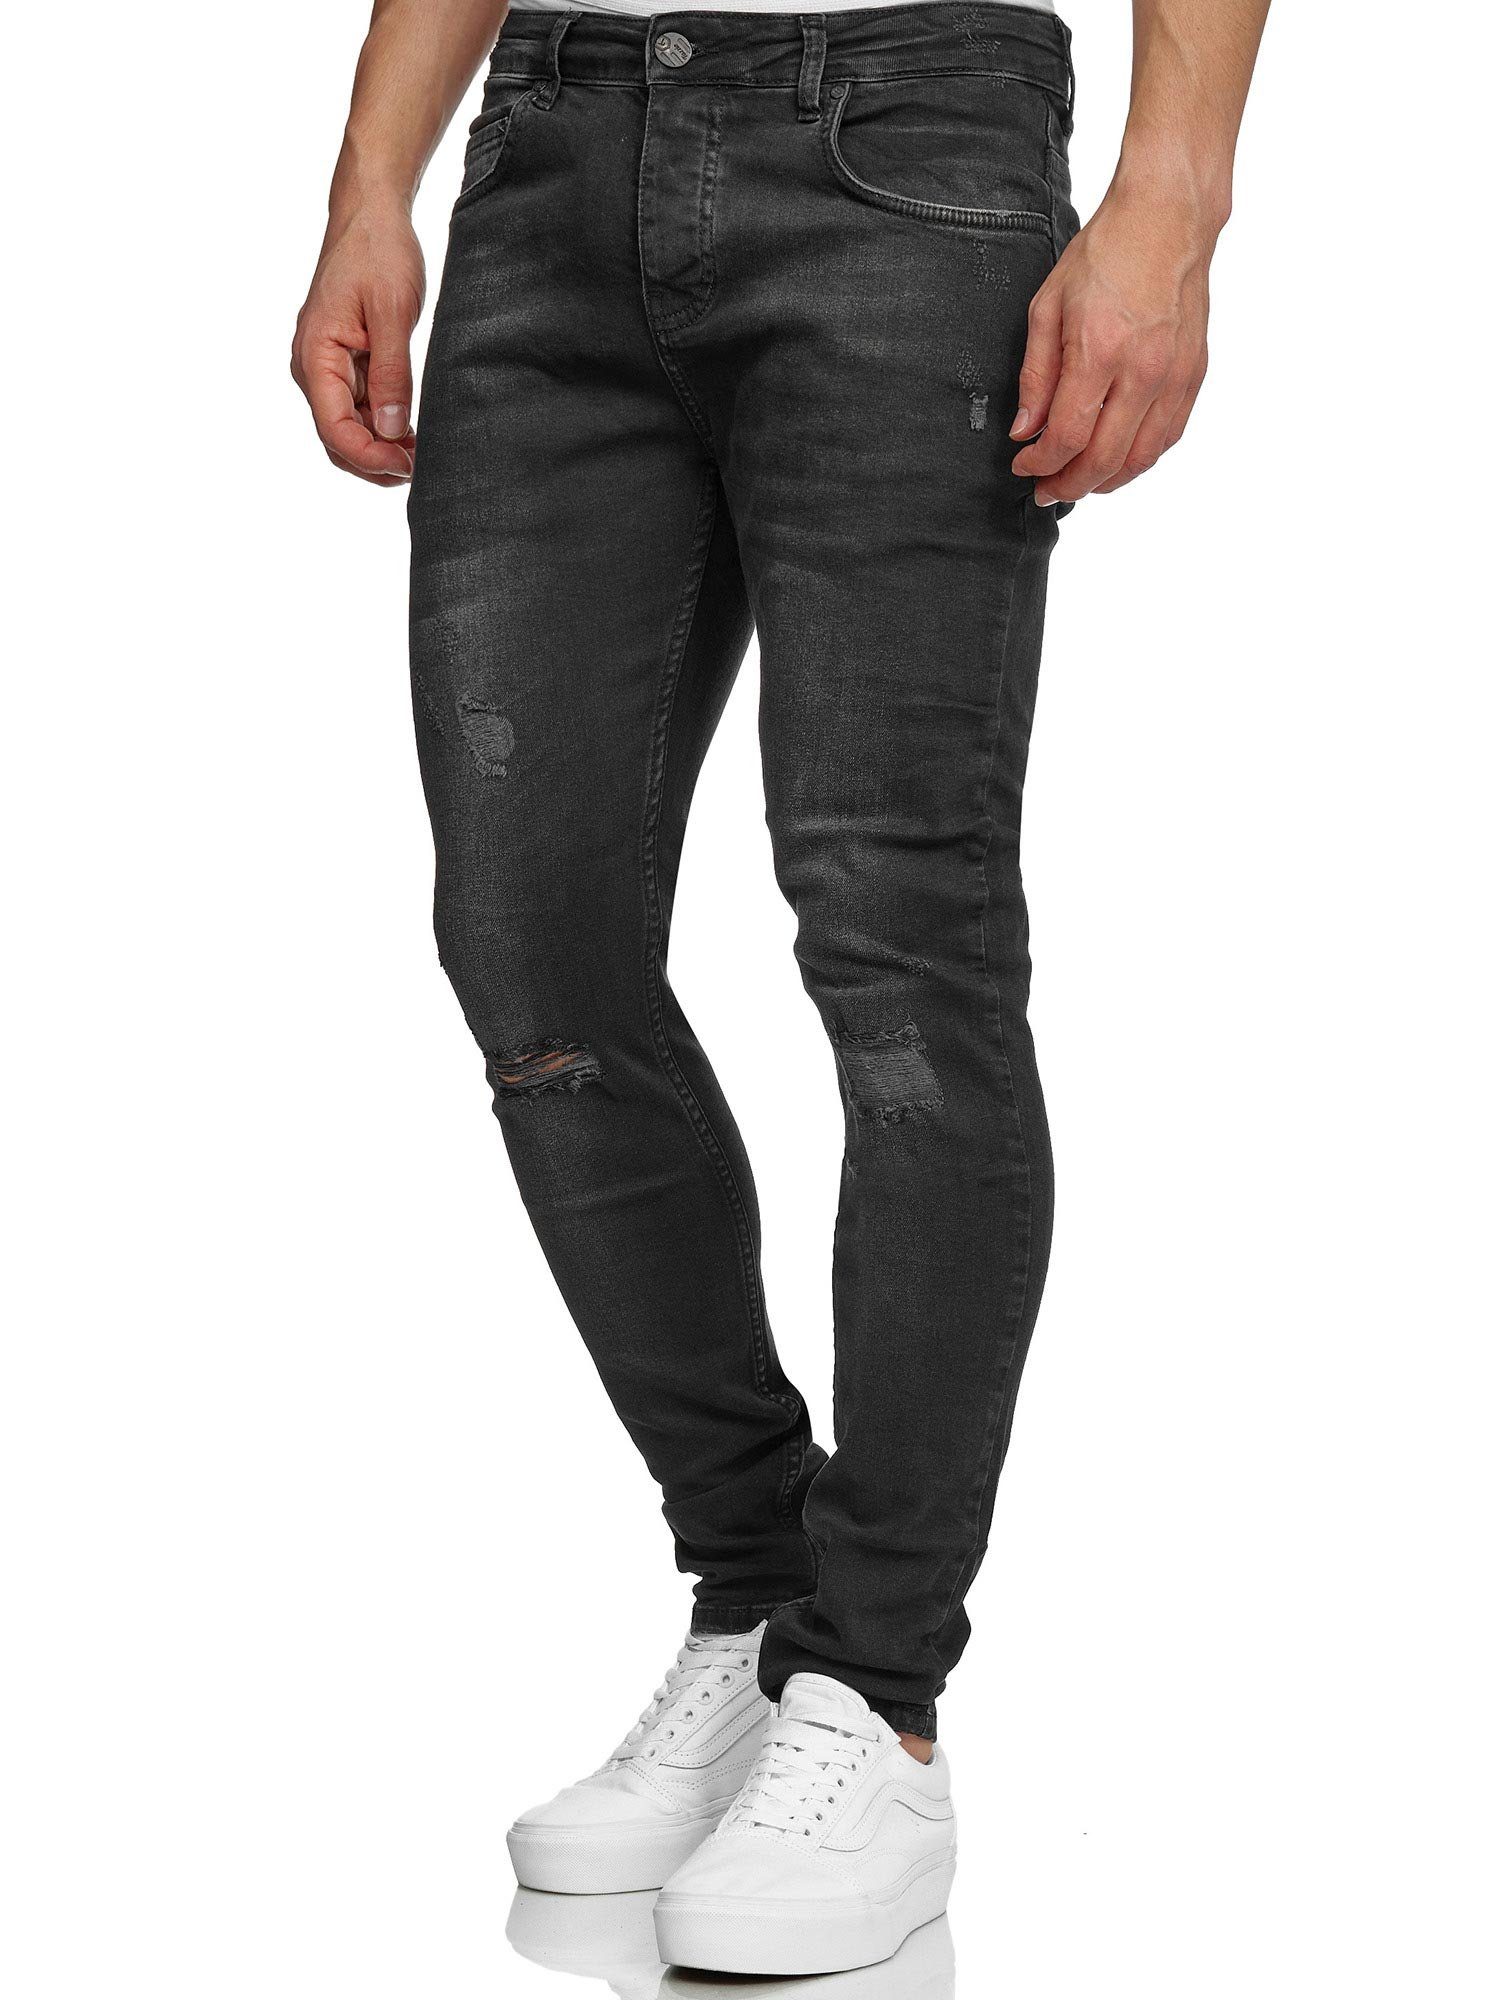 Tazzio Skinny-fit-Jeans 17514 im Destroyed-Look schwarz